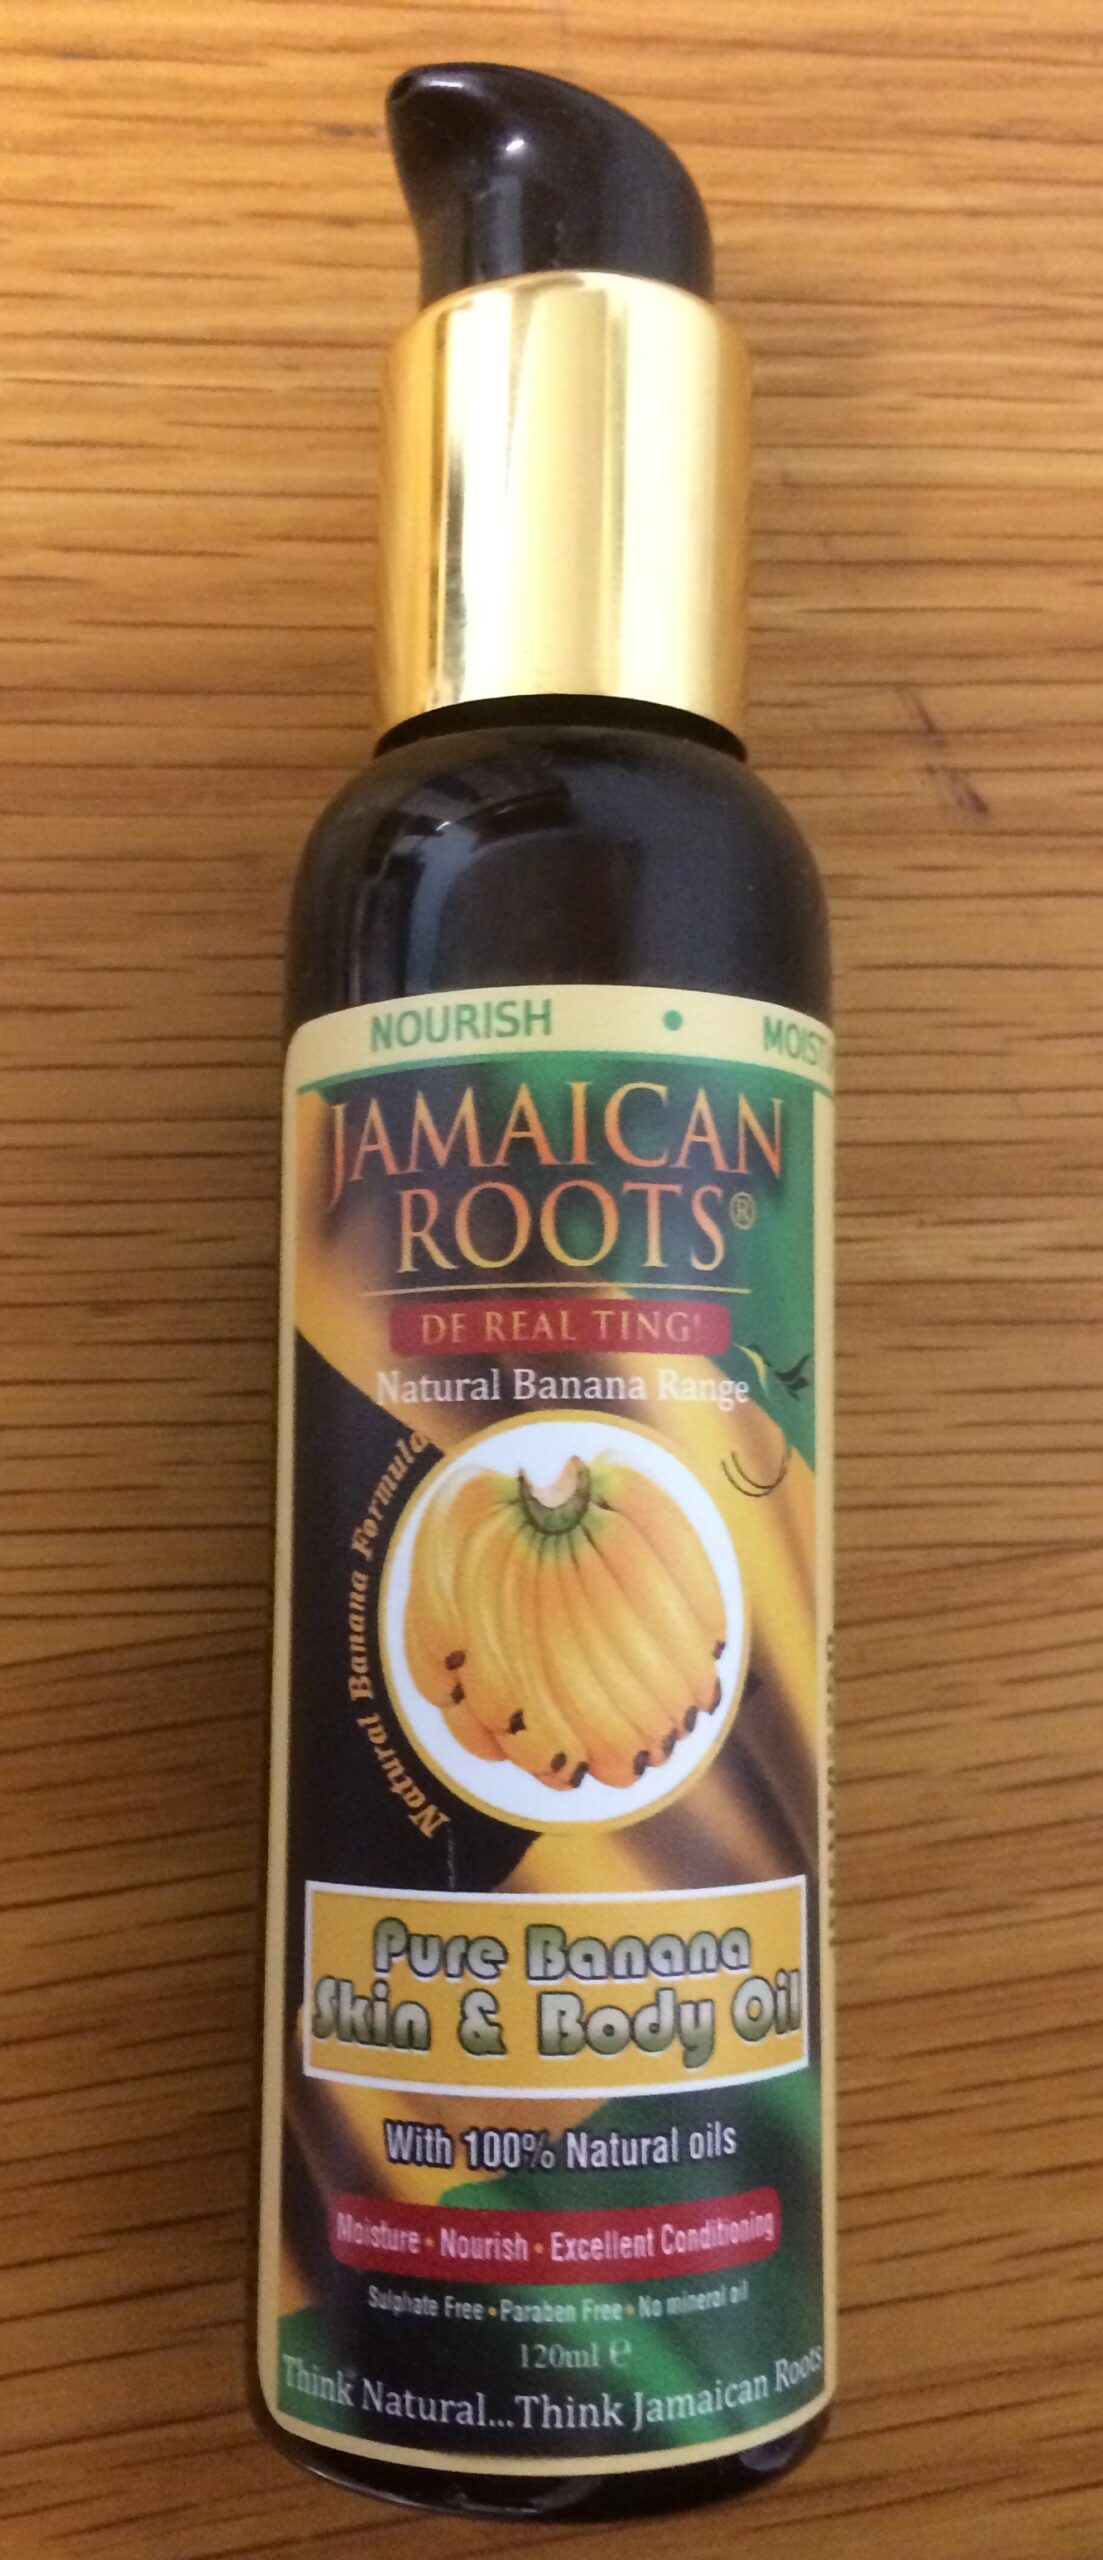 Jamaica Roots Pure Banana Skin & Body Oil Moisturiser -120ml